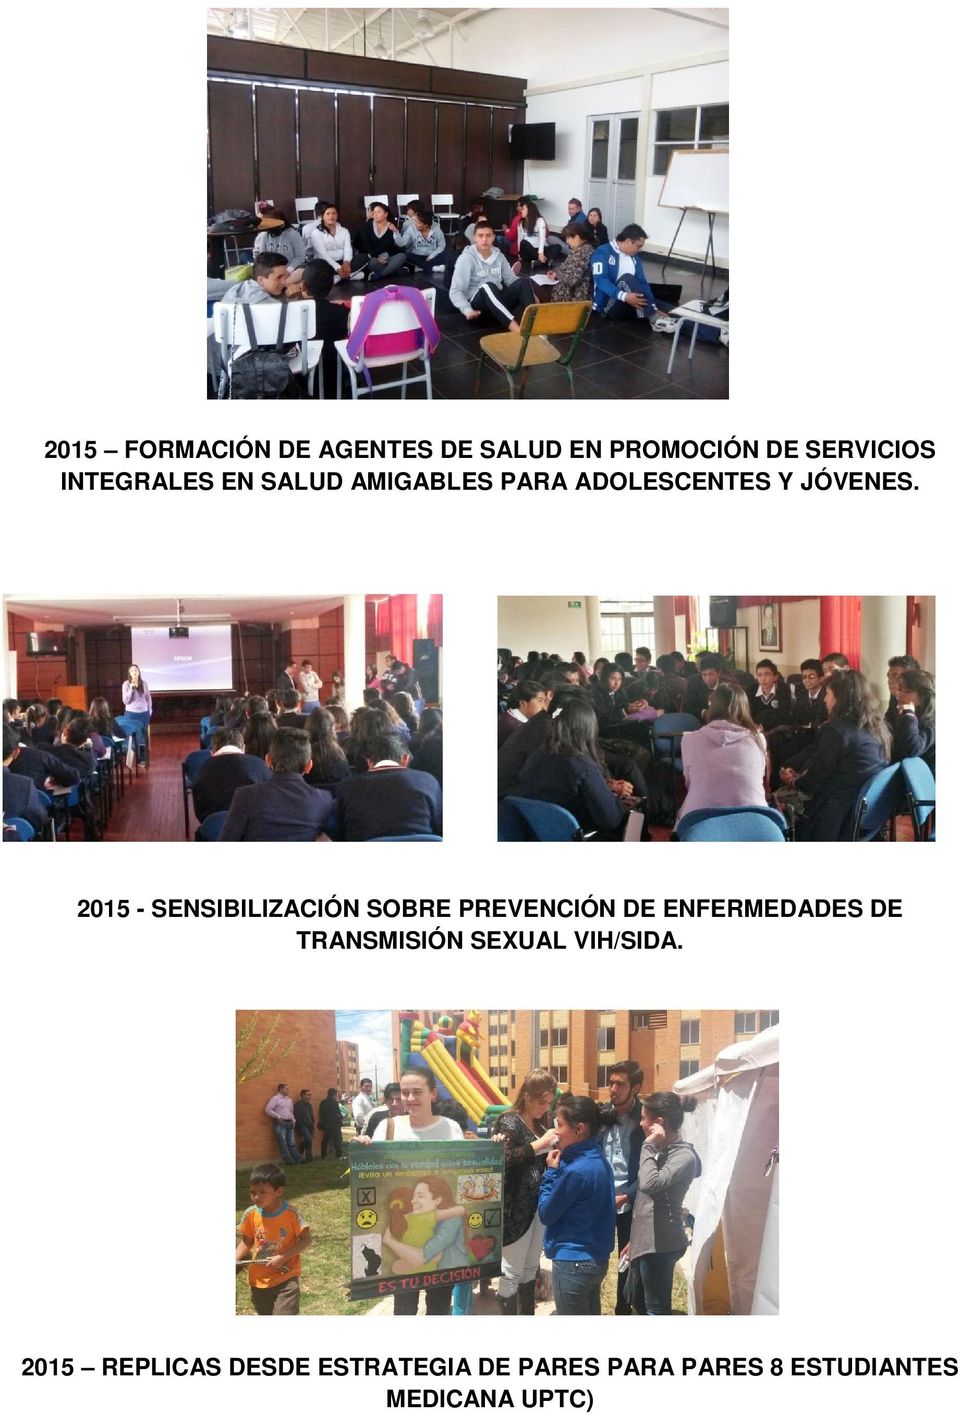 2015 - SENSIBILIZACIÓN SOBRE PREVENCIÓN DE ENFERMEDADES DE TRANSMISIÓN